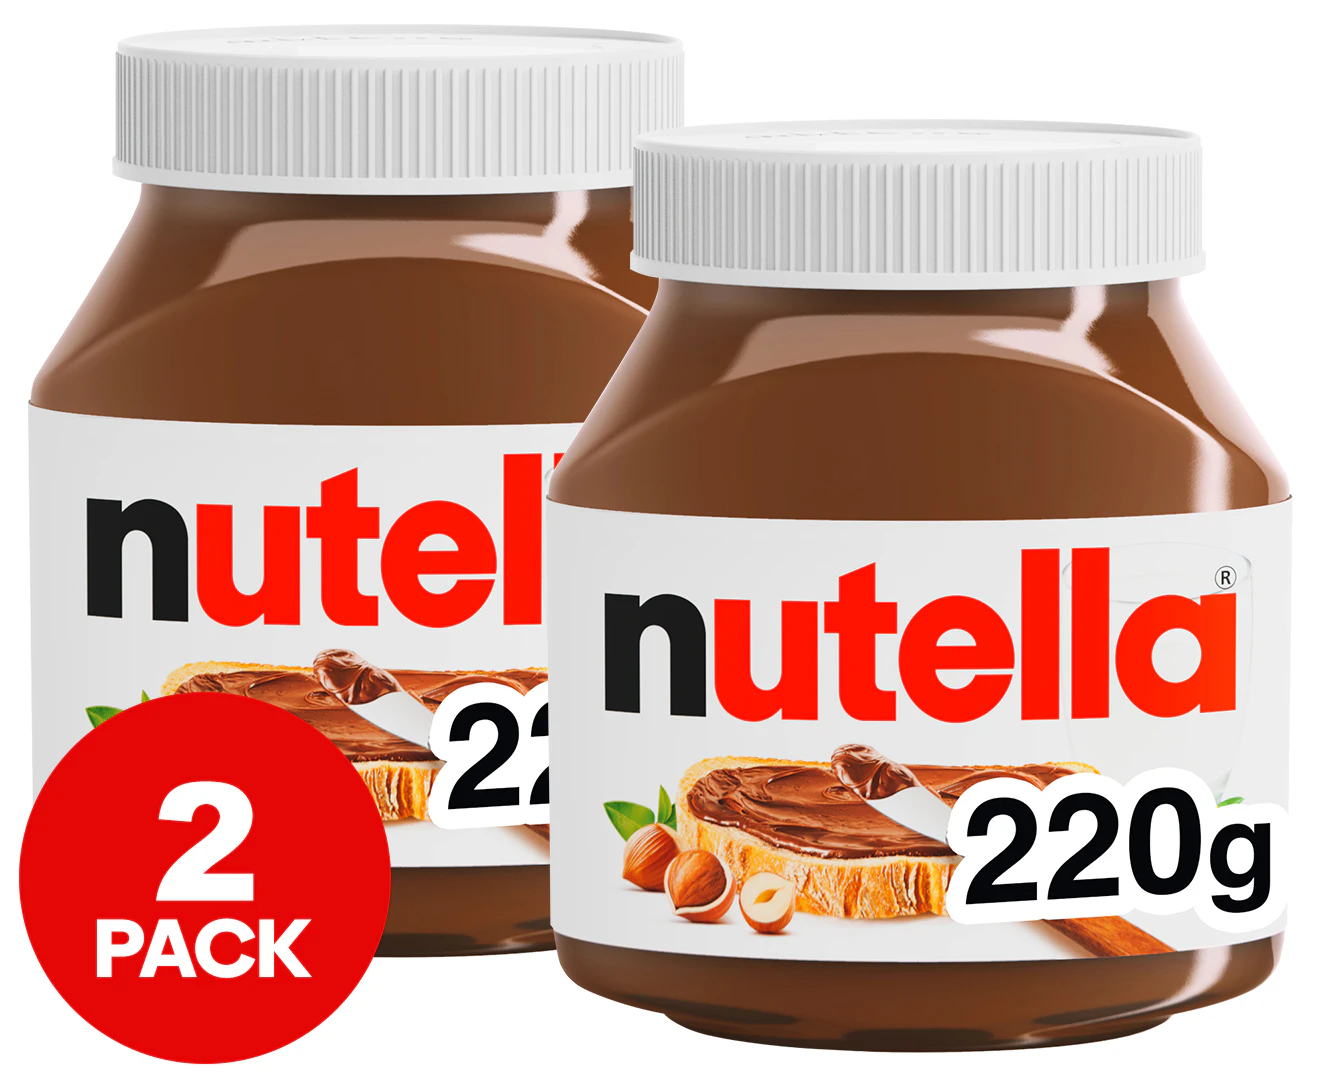 2 Nutella Jar 220g | Catch.com.au